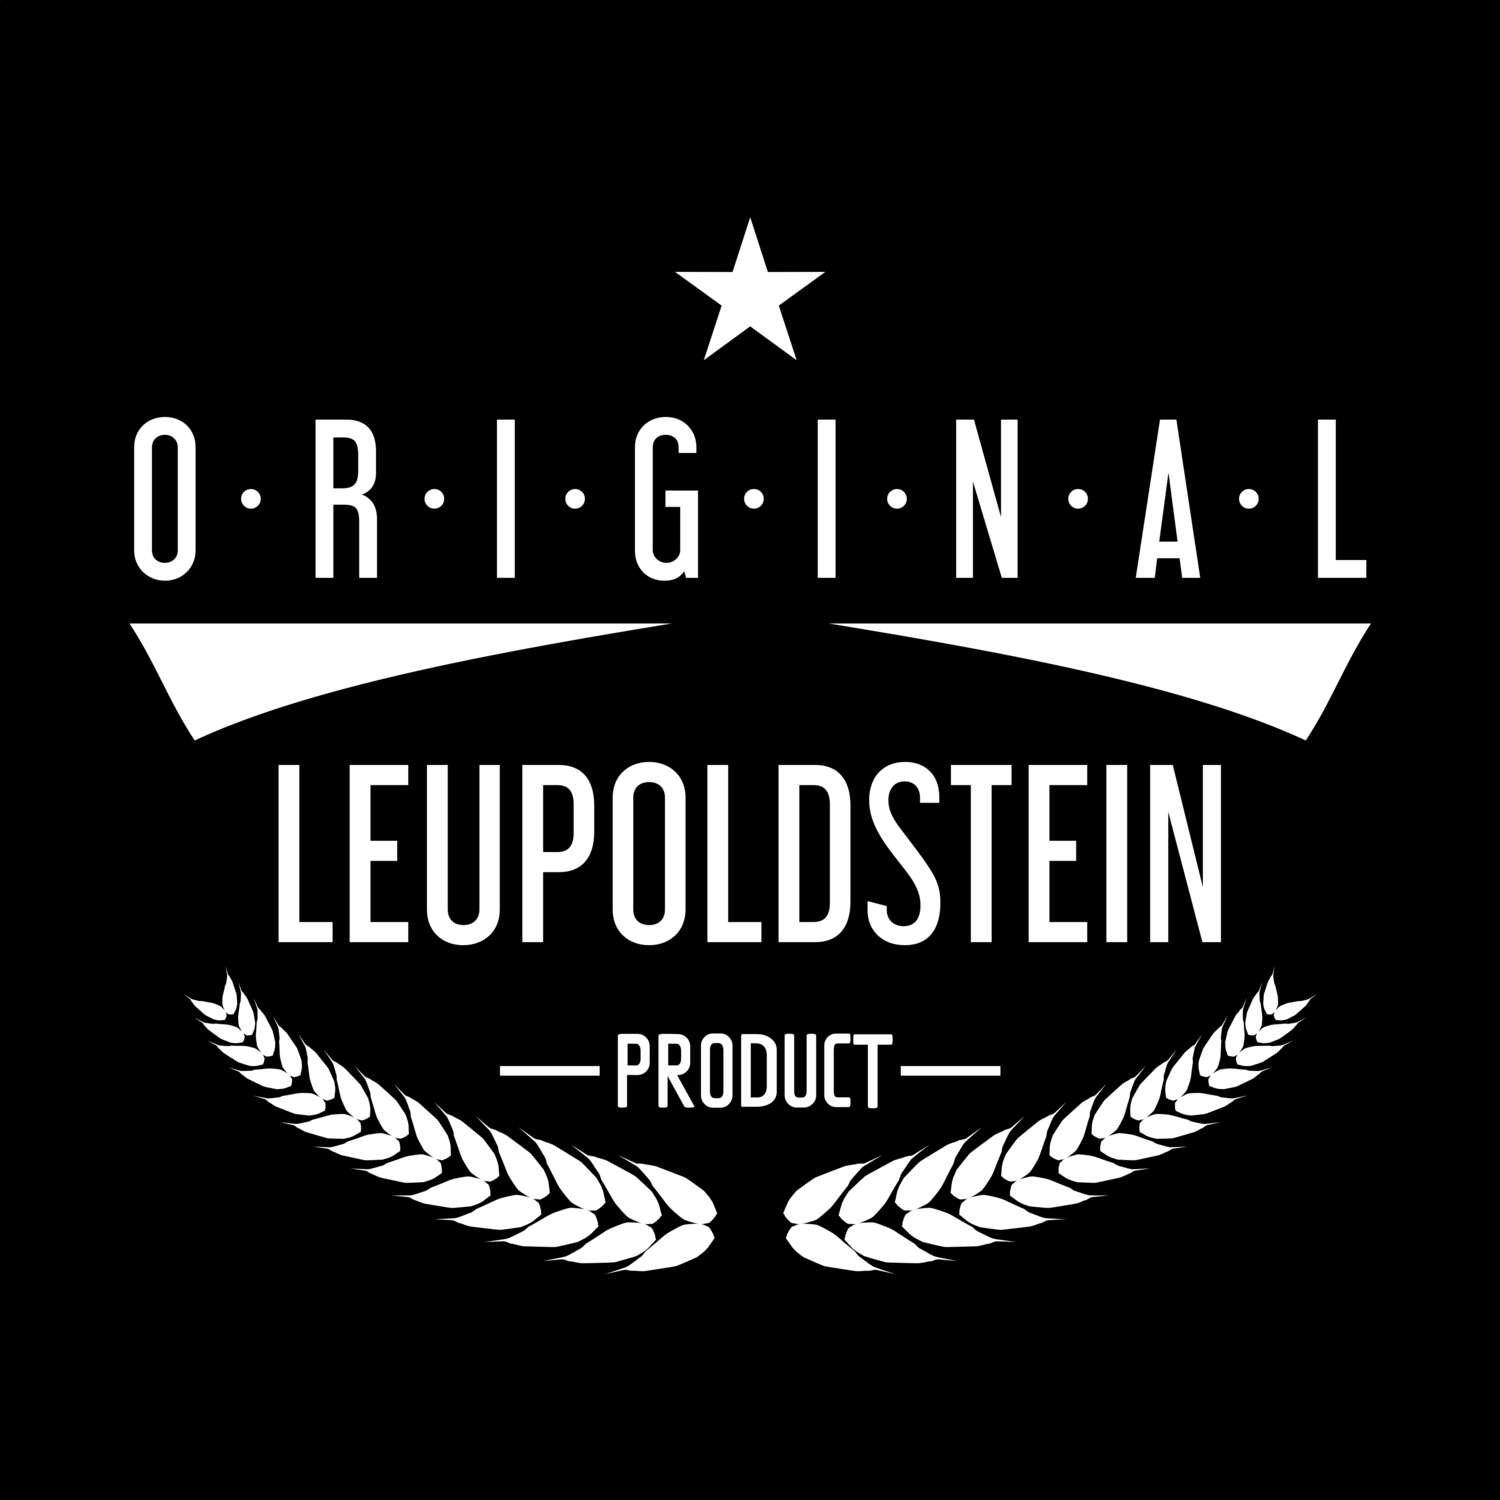 Leupoldstein T-Shirt »Original Product«